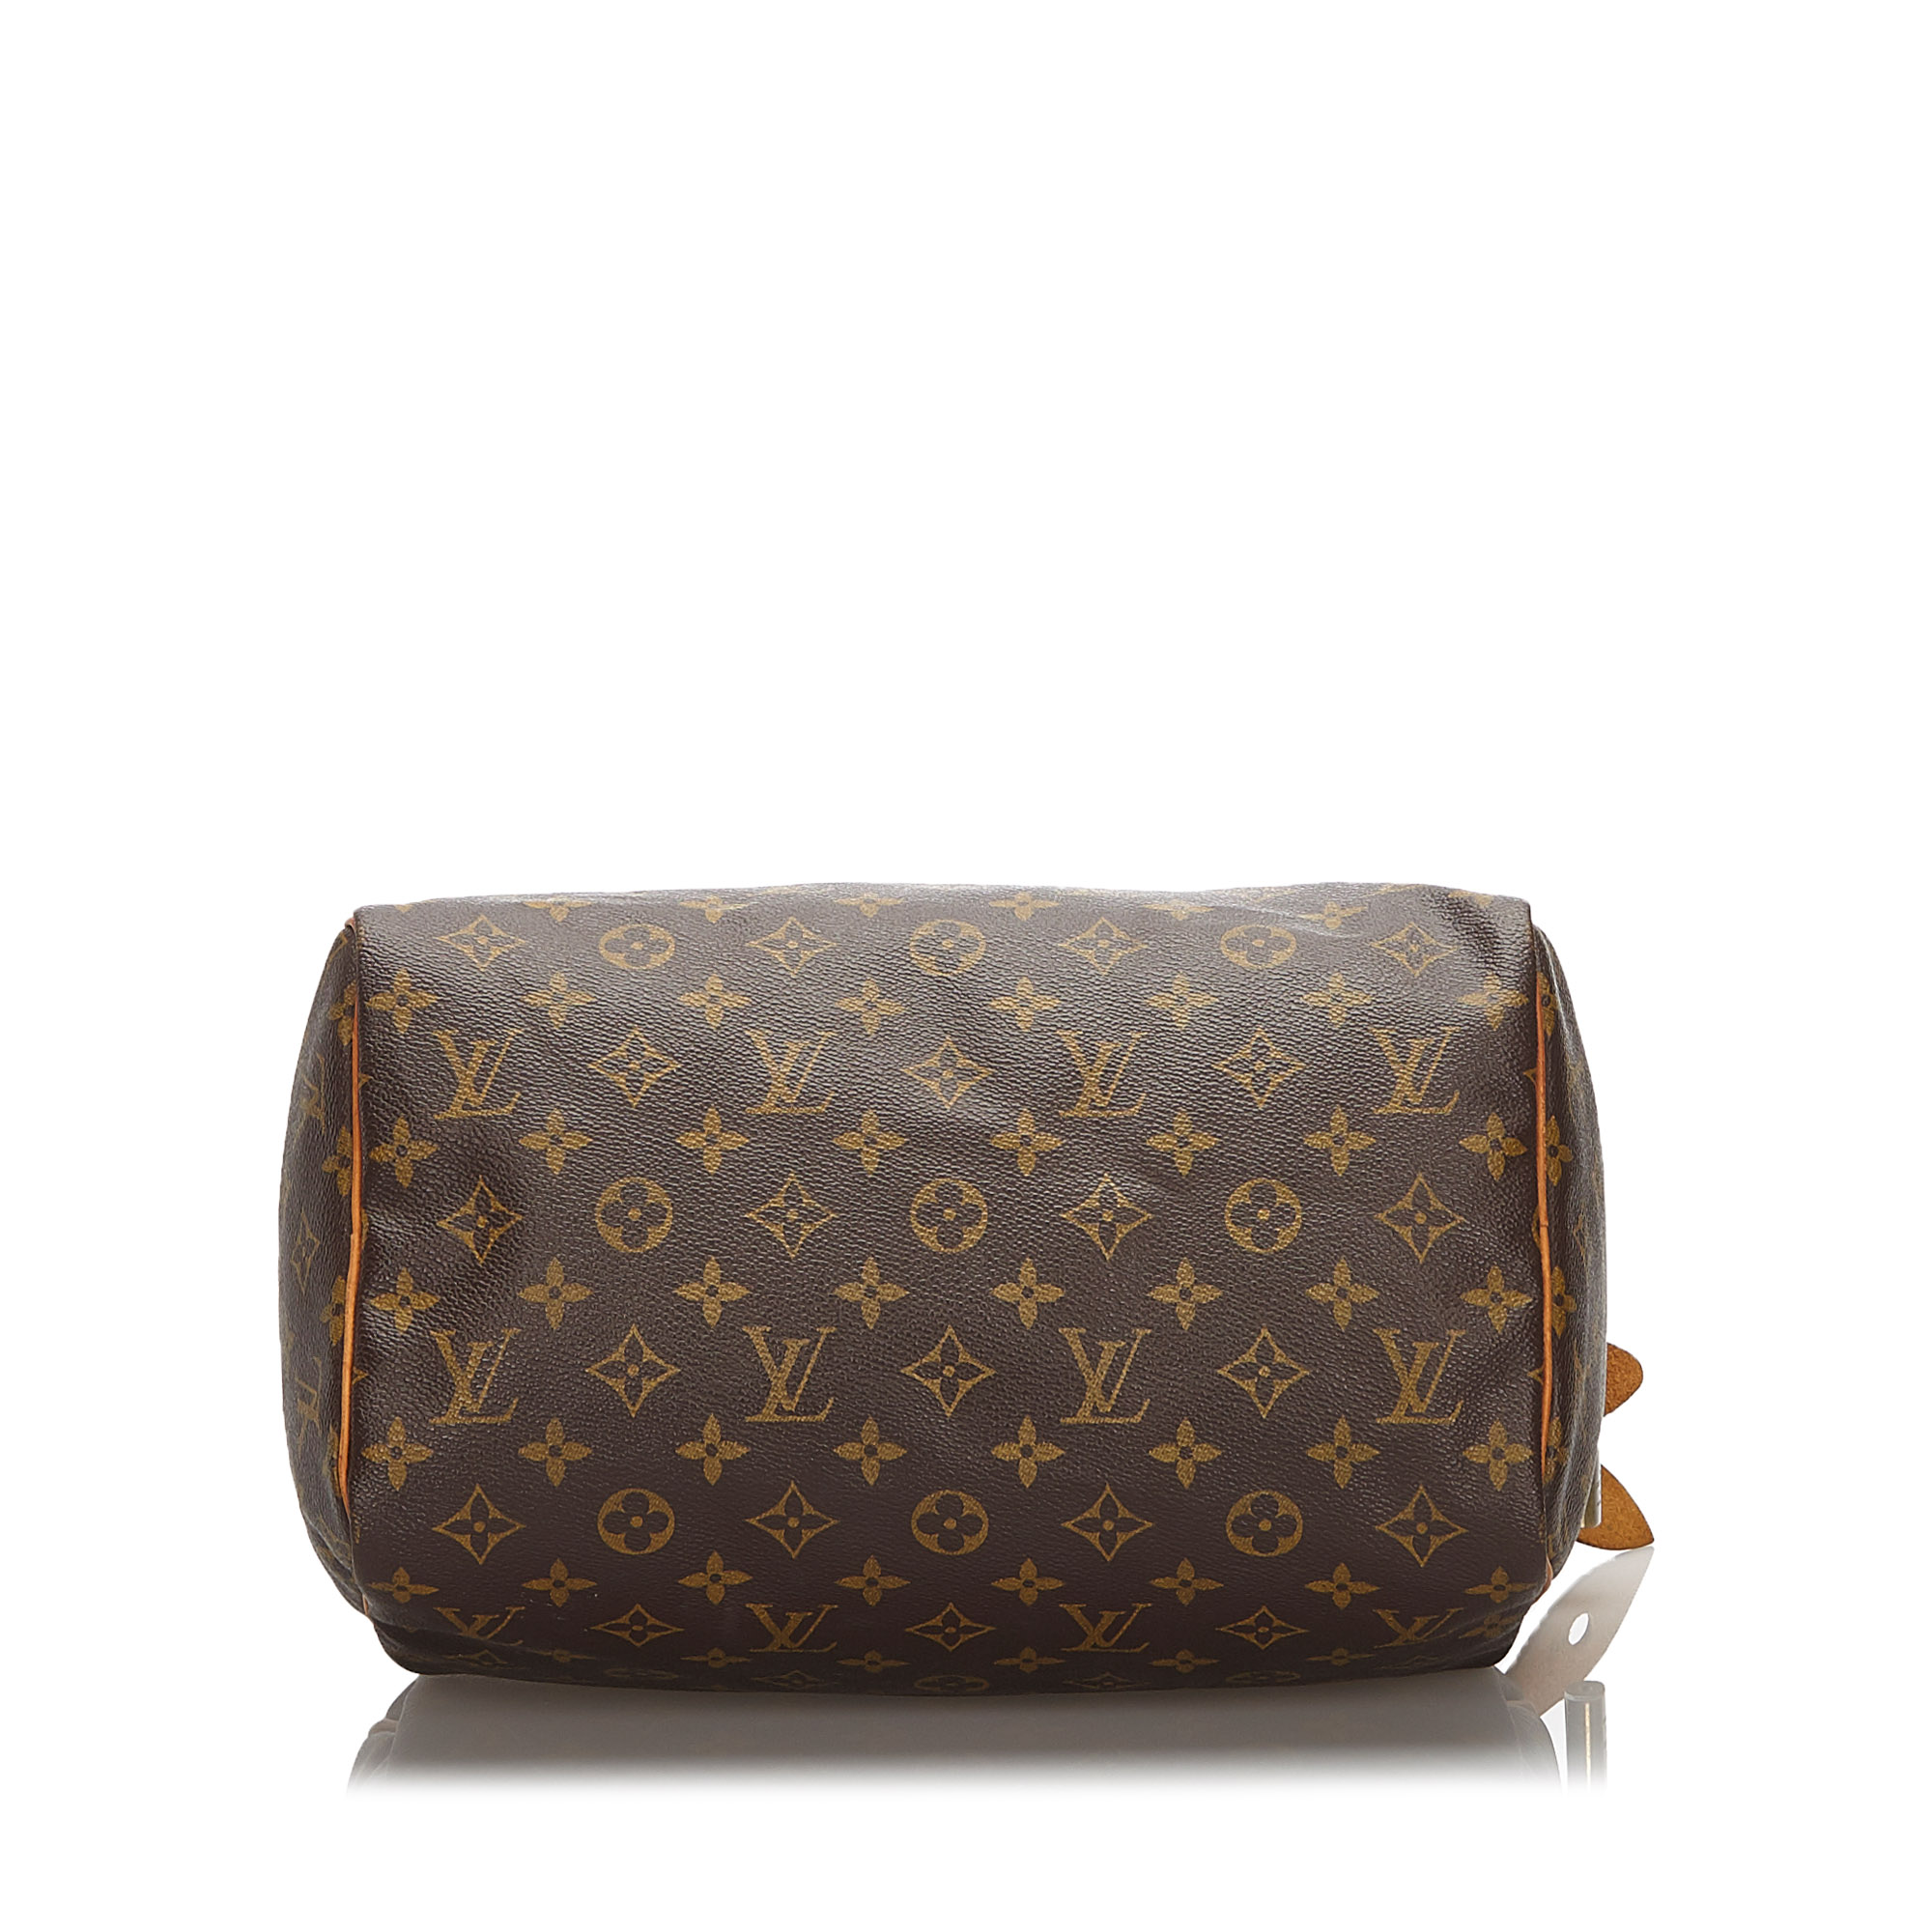 Louis Vuitton Monogram Speedy 30 Bag - Image 3 of 9